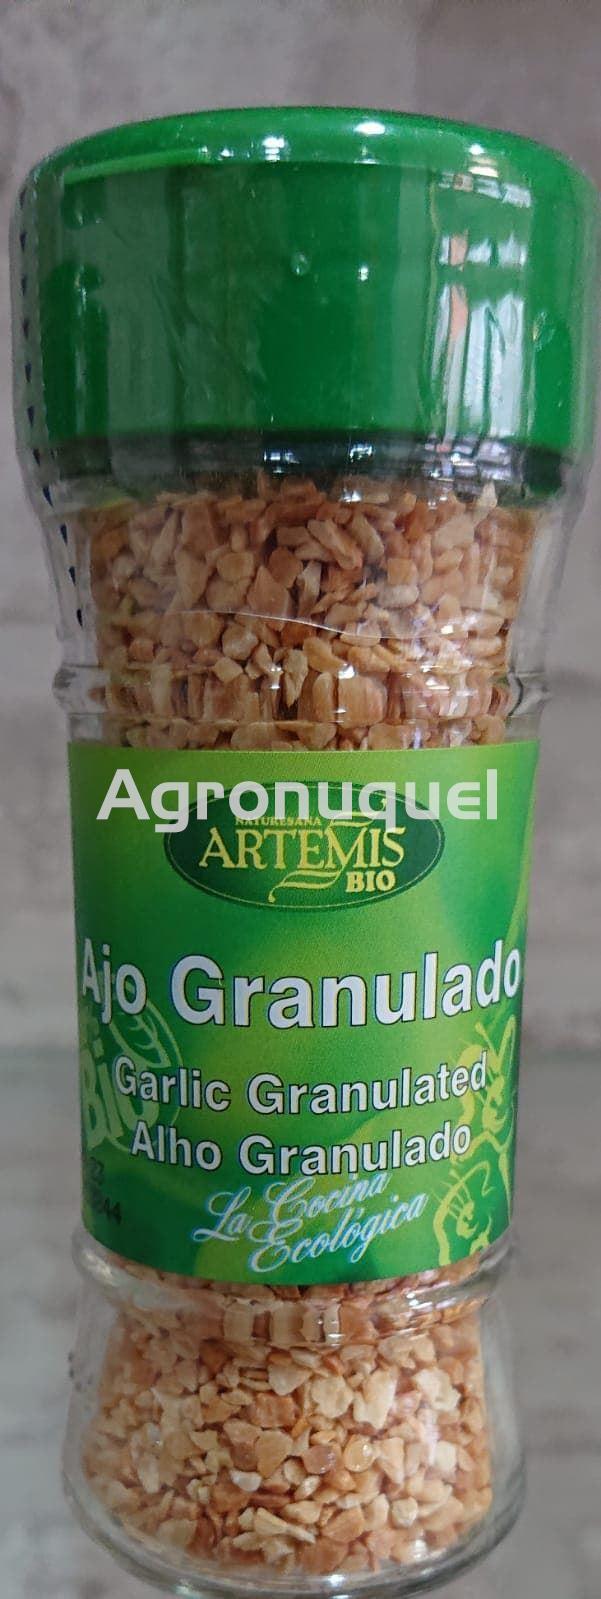 AJO GRANULADO - Imagen 1